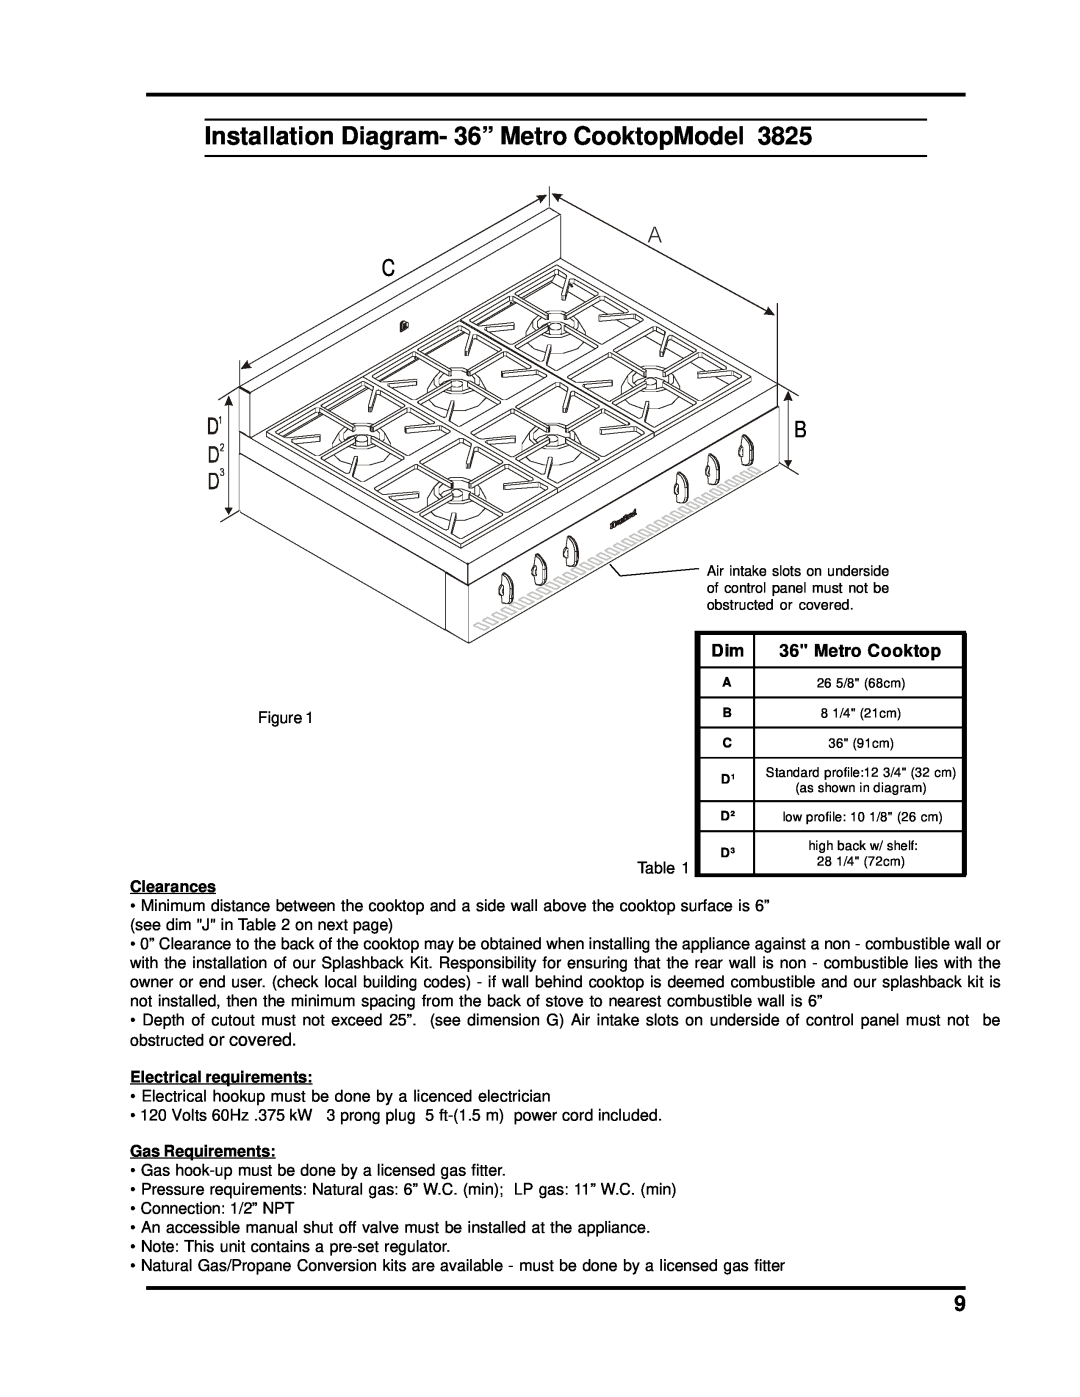 Heartland Bakeware 3805-3825, 3800-3820 Installation Diagram- 36” Metro CooktopModel, Clearances, Electrical requirements 